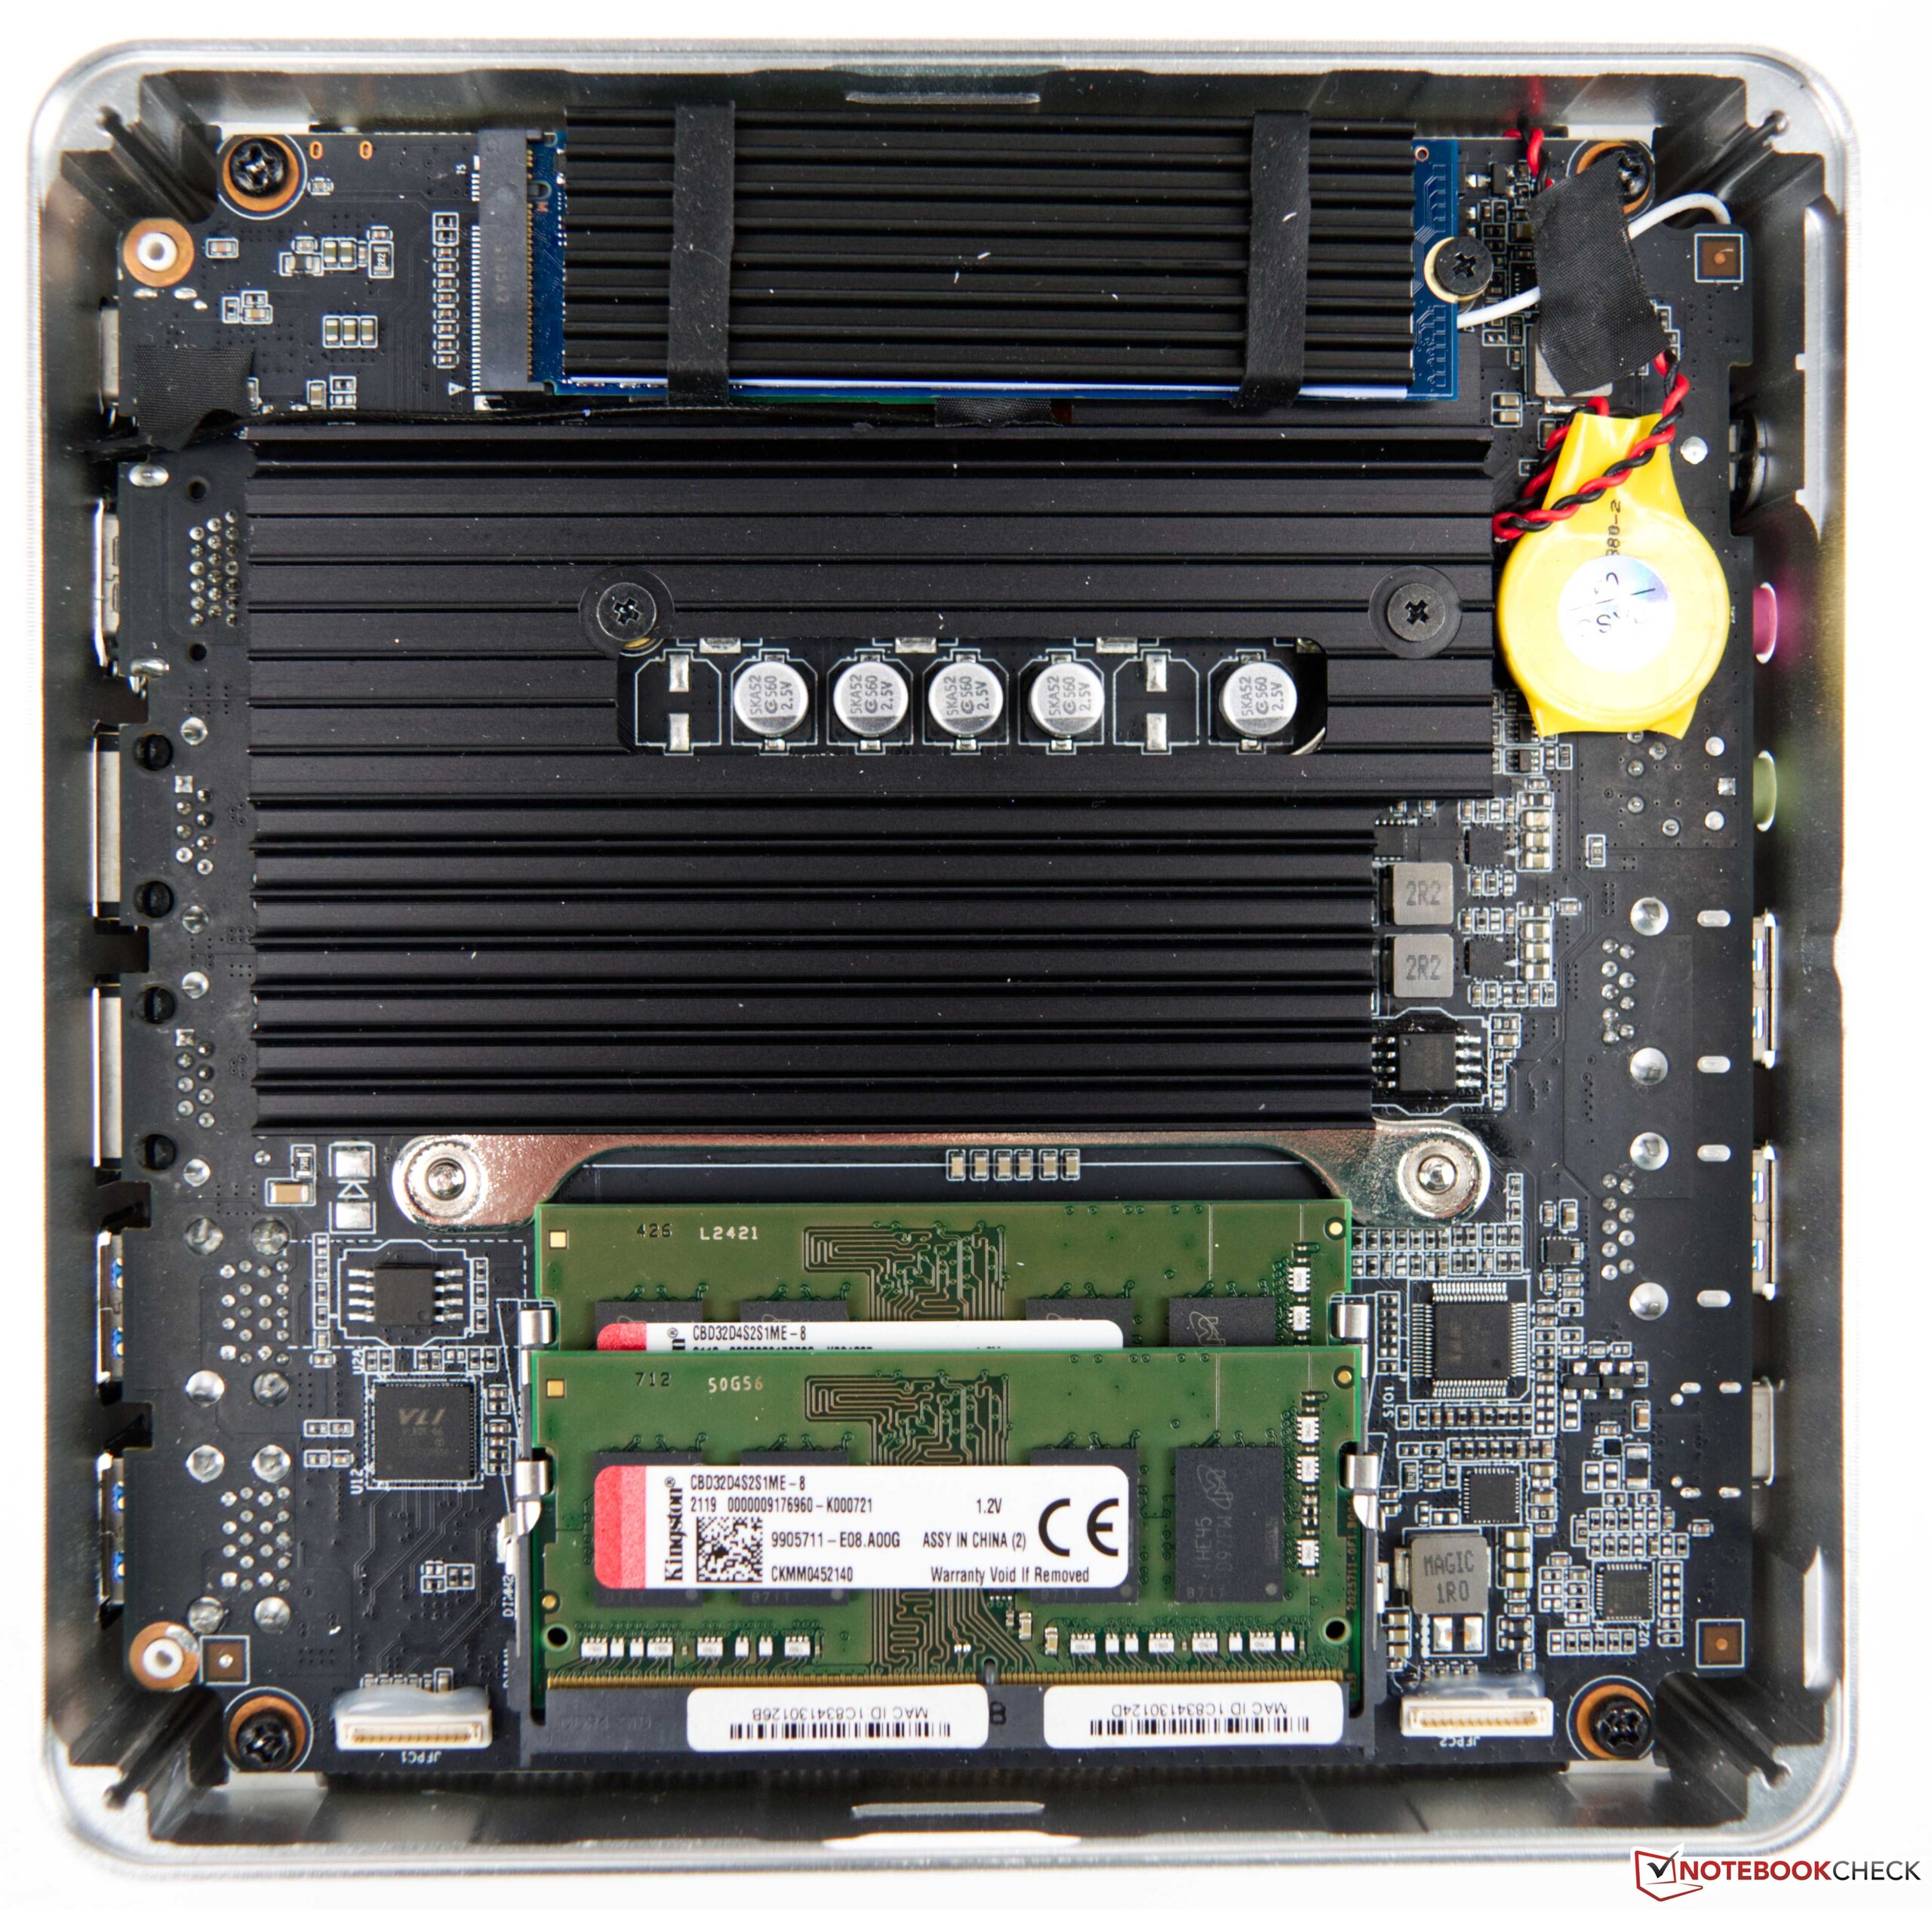 Review of the Minisforum EliteMini HM90 desktop PC with fast AMD